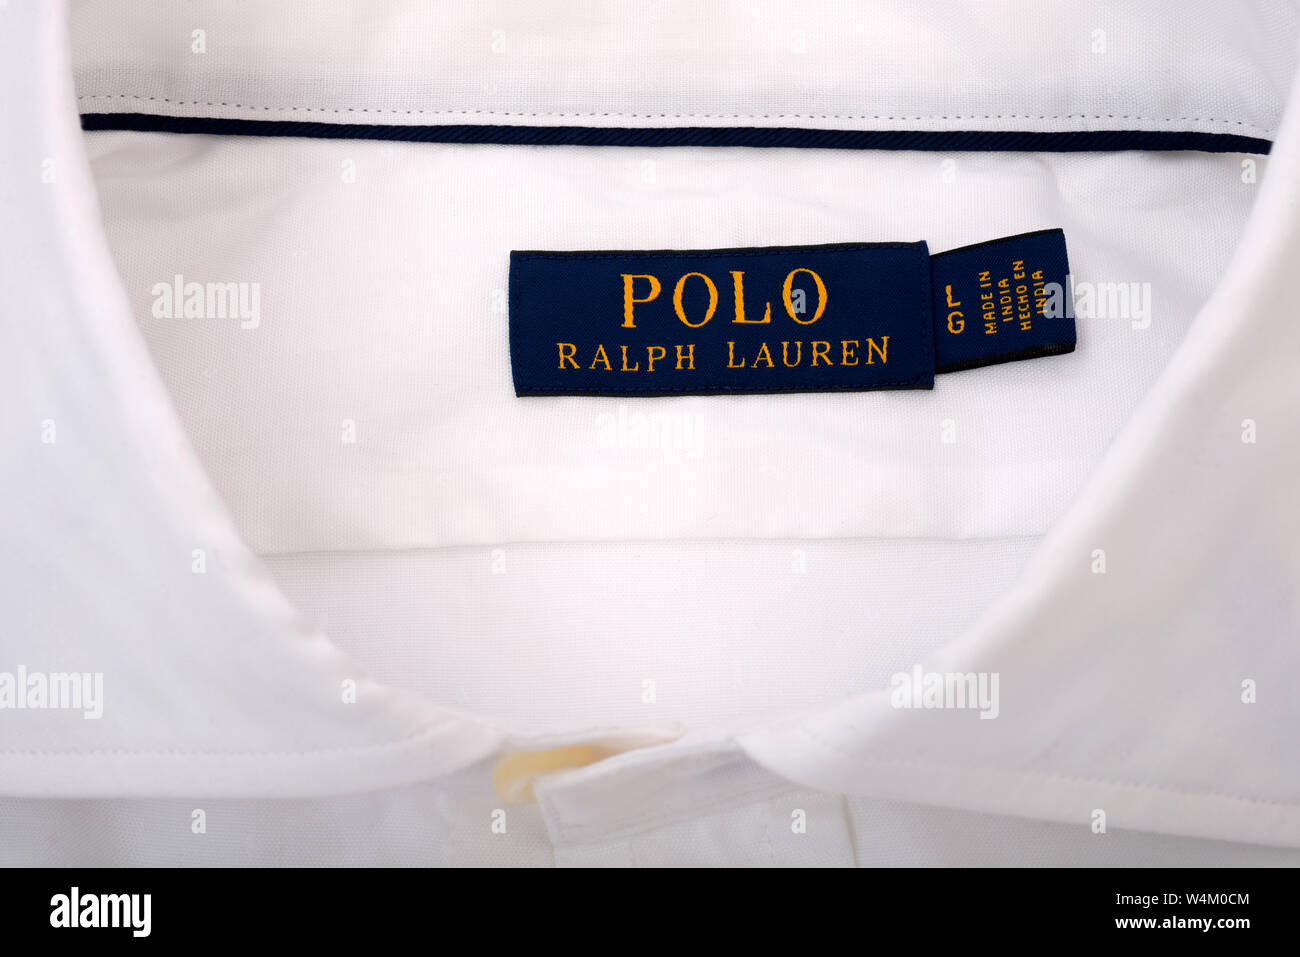 Polo Ralph Lauren mens shirt Stock Photo - Alamy